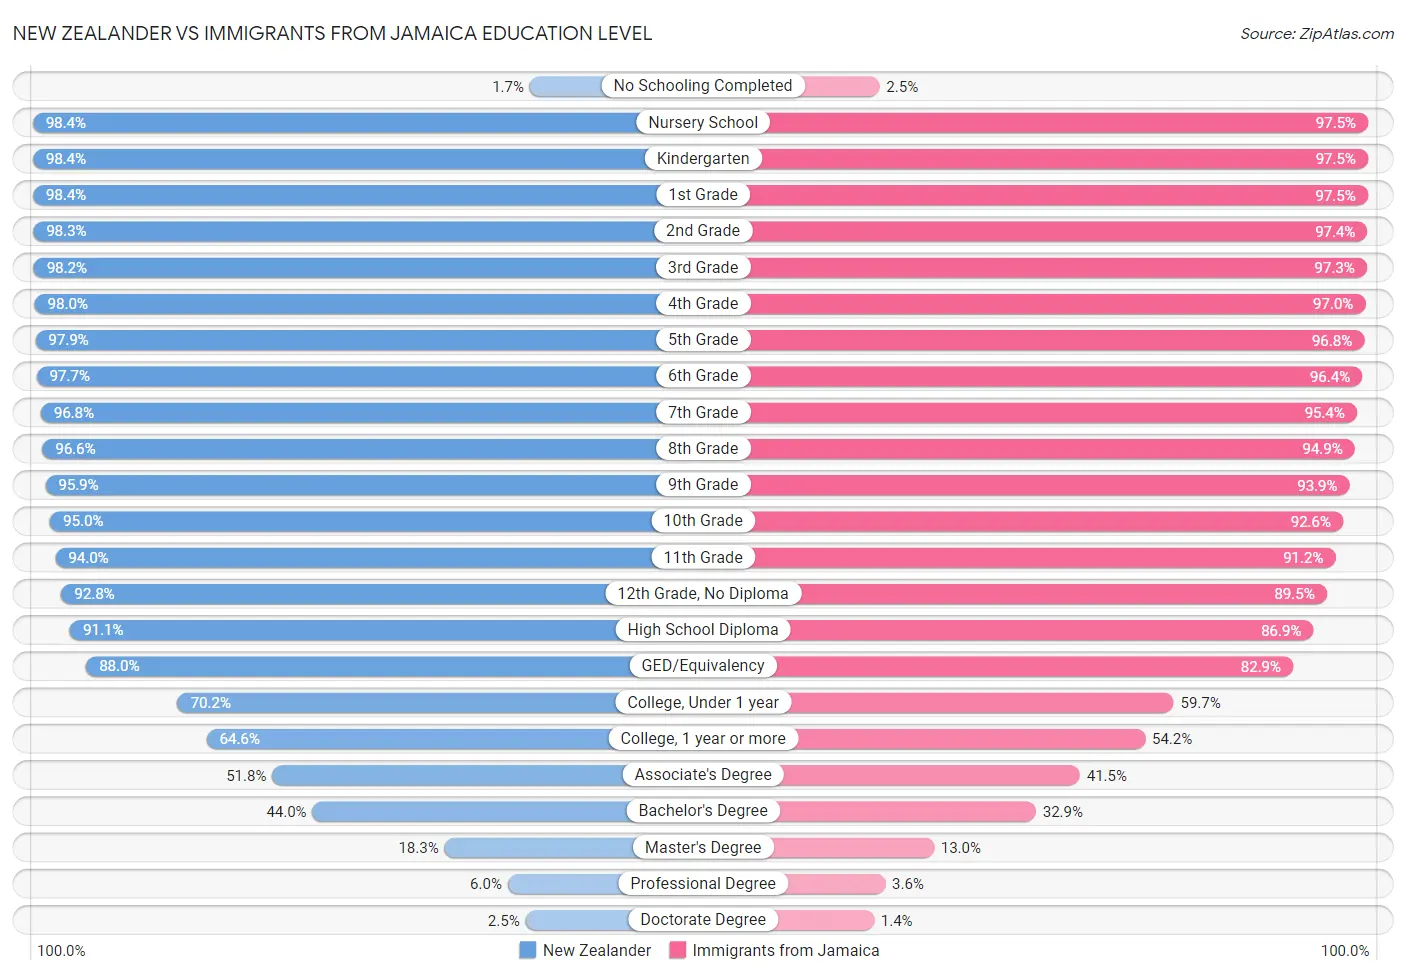 New Zealander vs Immigrants from Jamaica Education Level